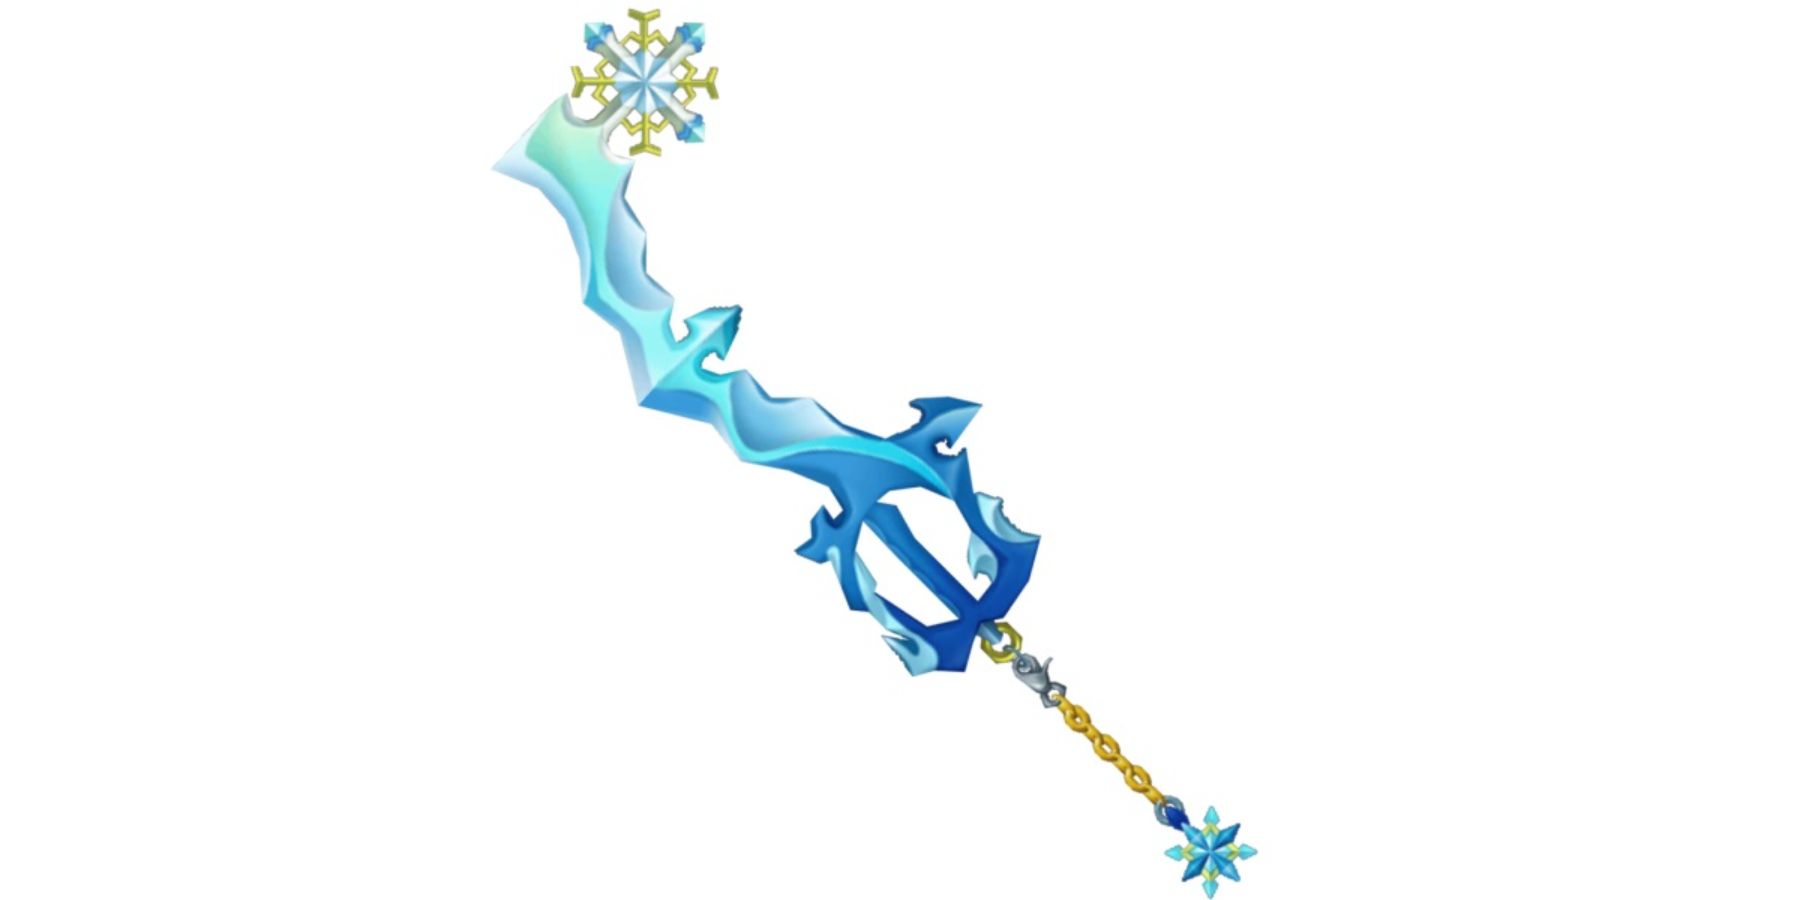 The Diamond Dust Keyblade in Kingdom Hearts